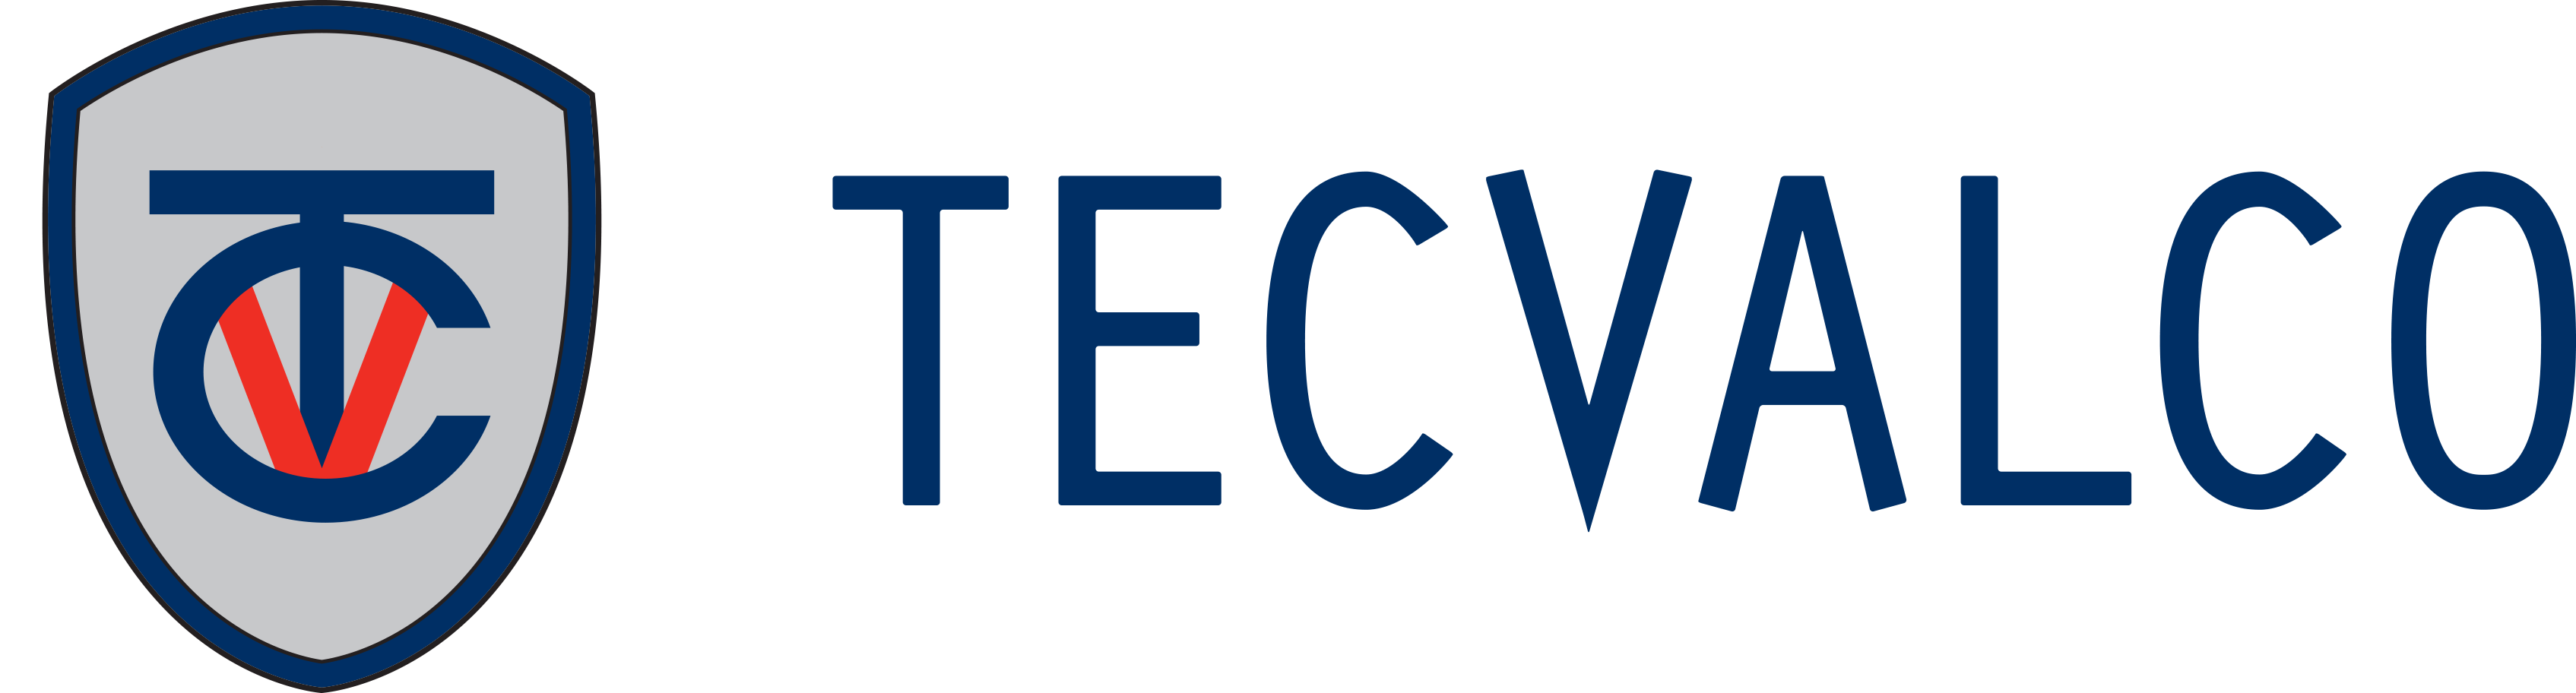 1807-tecvalco-logo-2017-horizontal-spot-colour-16442595601111.png